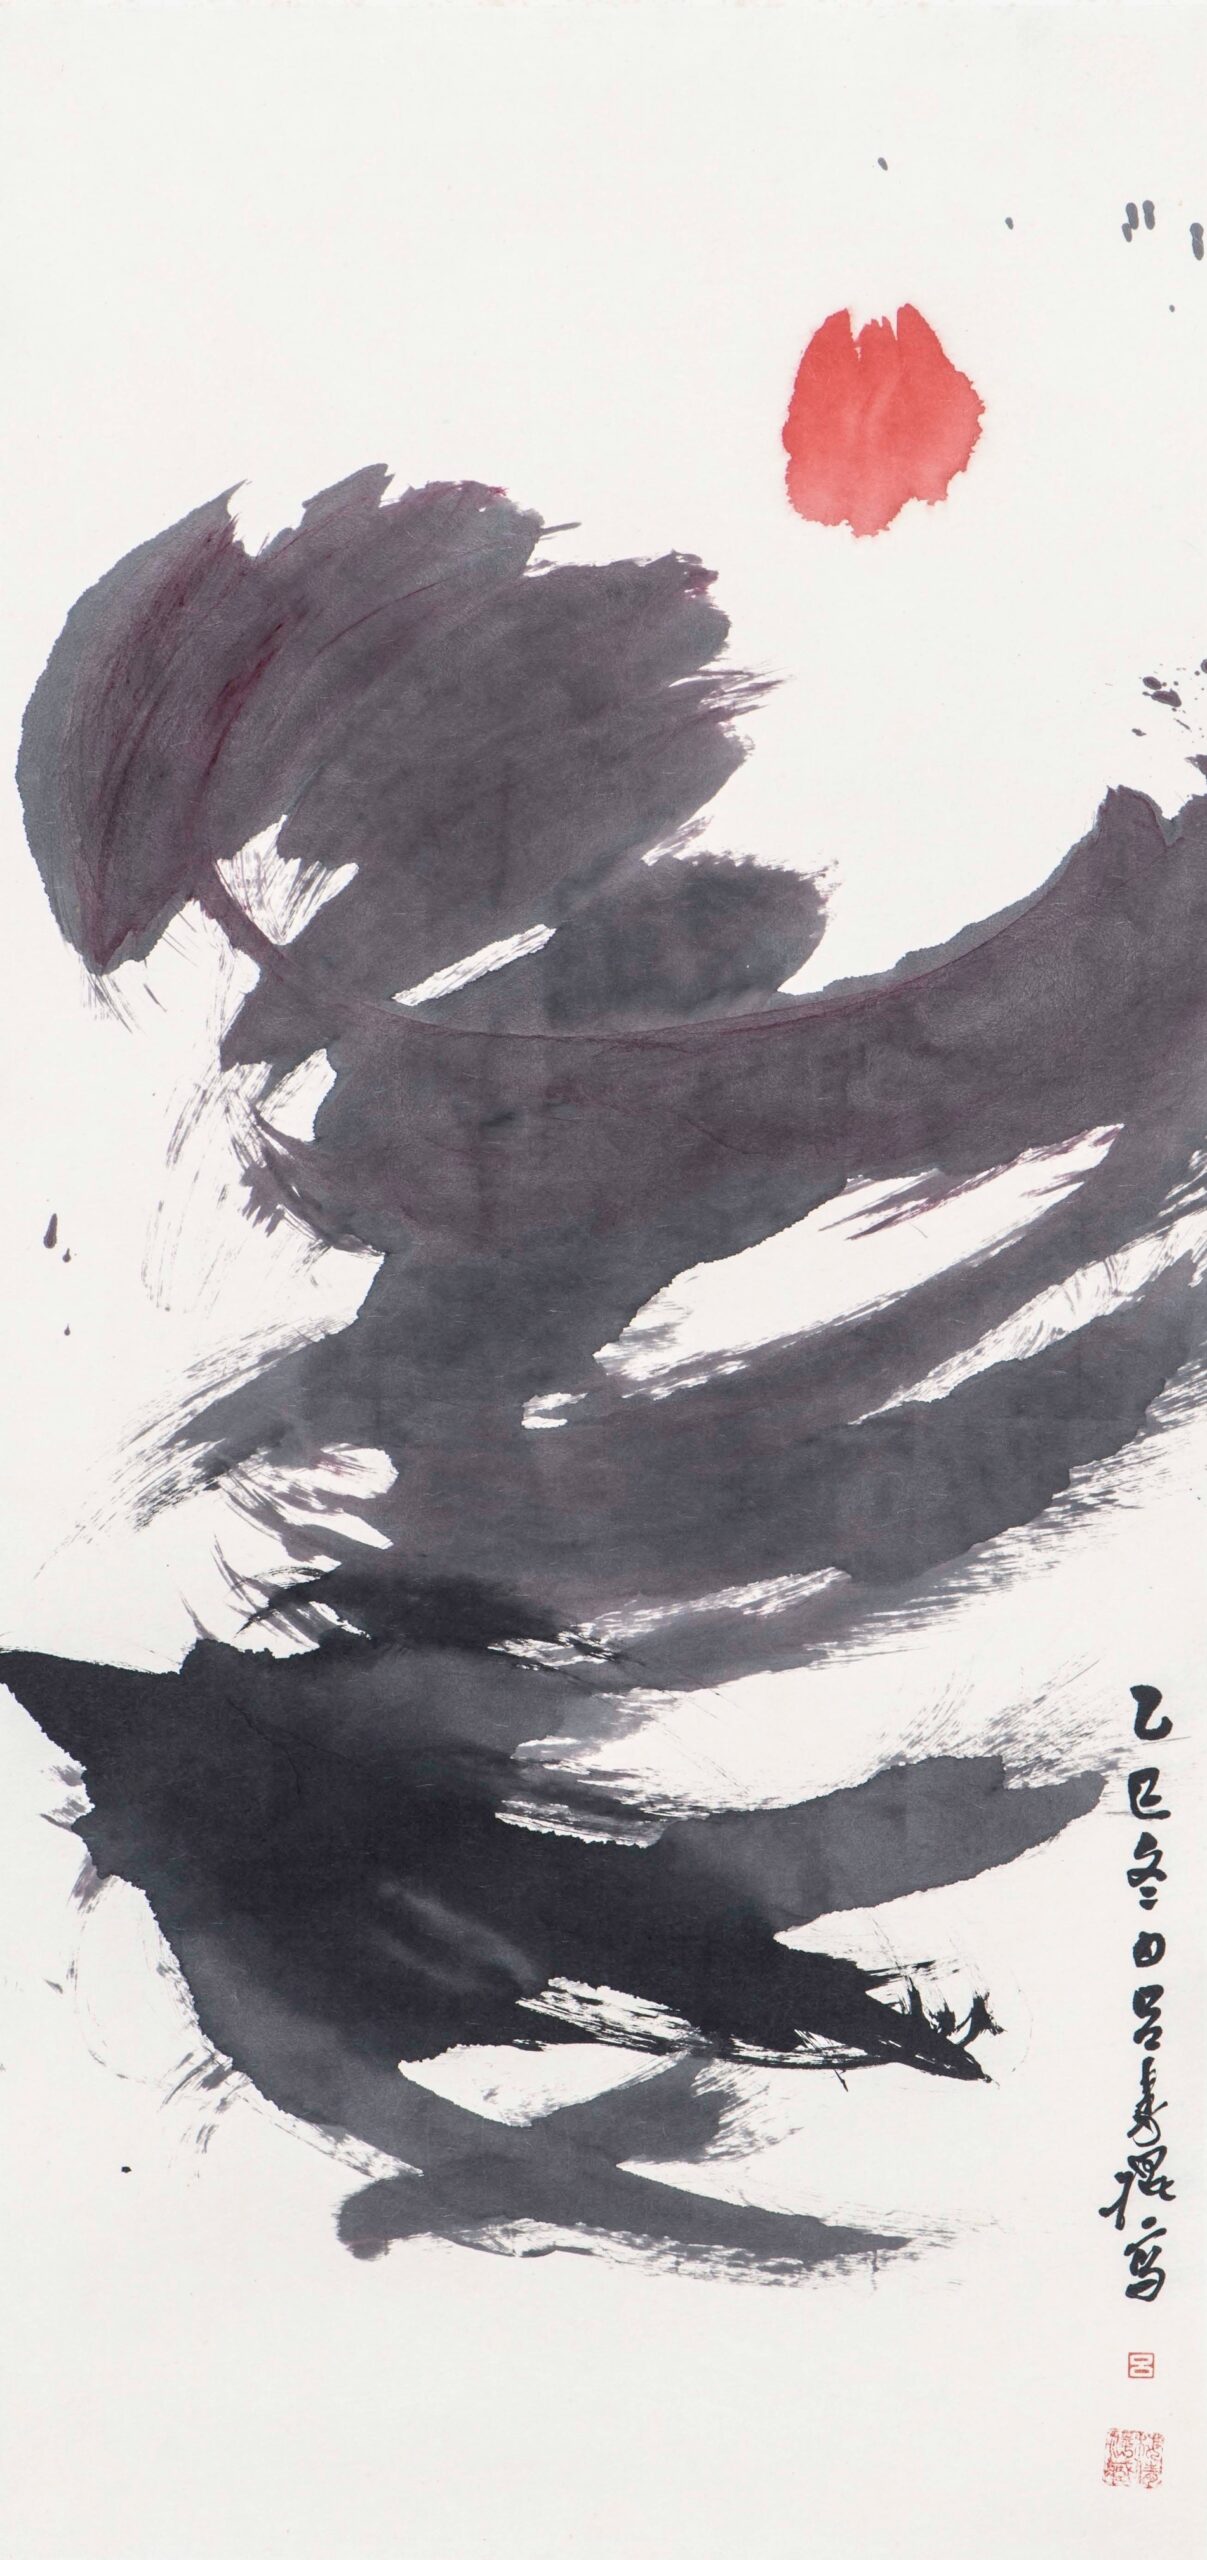 Zen Painting 1965 Winter by Lui Shou-Kwan, 1975-1919